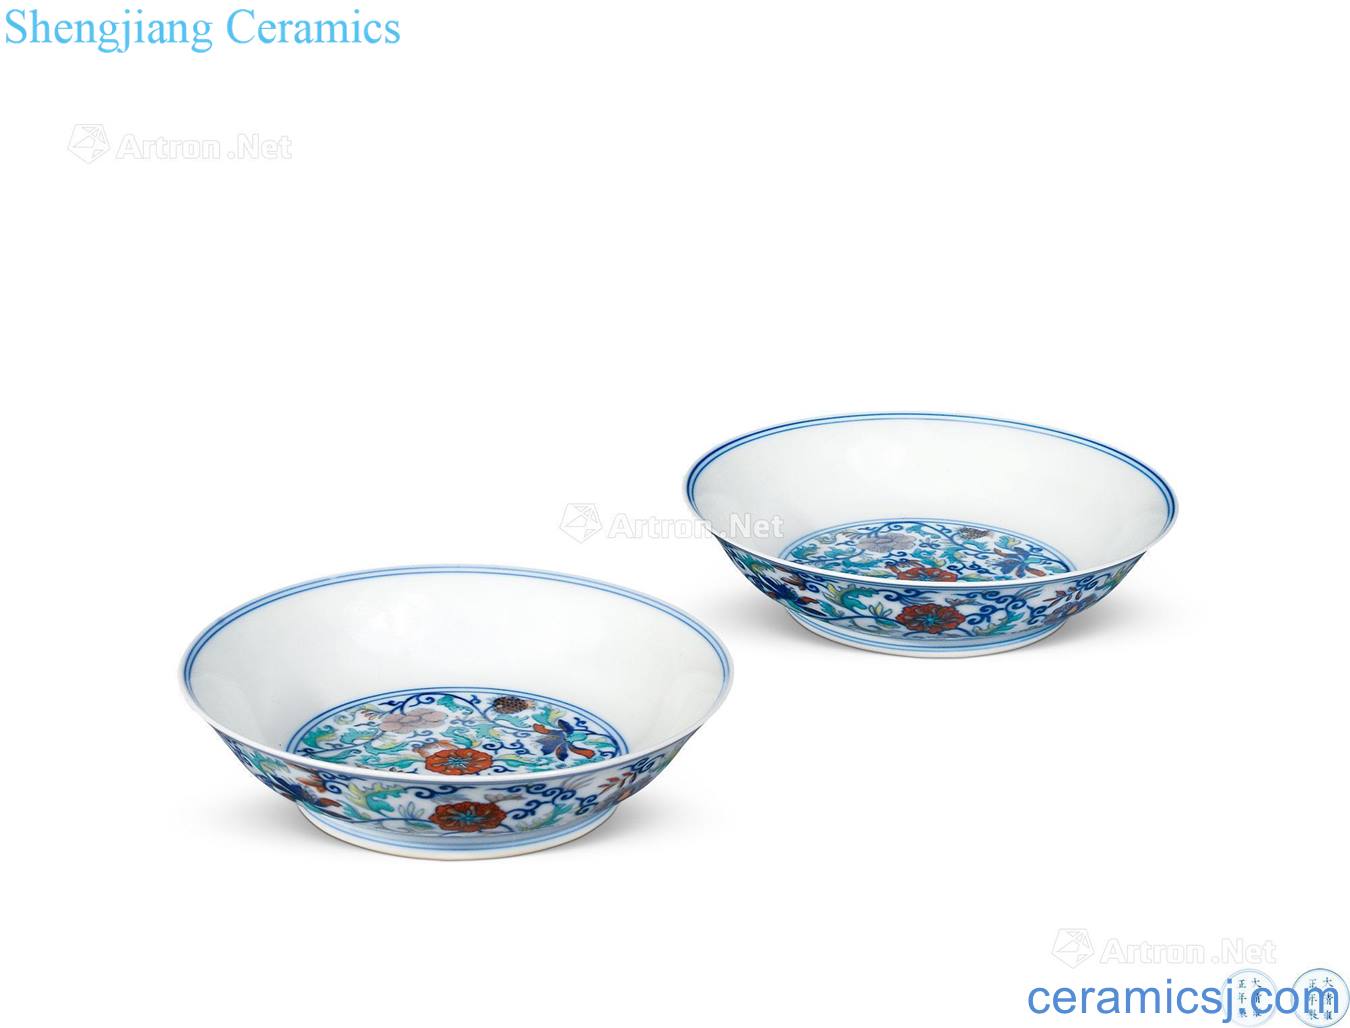 Qing yongzheng bucket colors branch pattern plate (a)